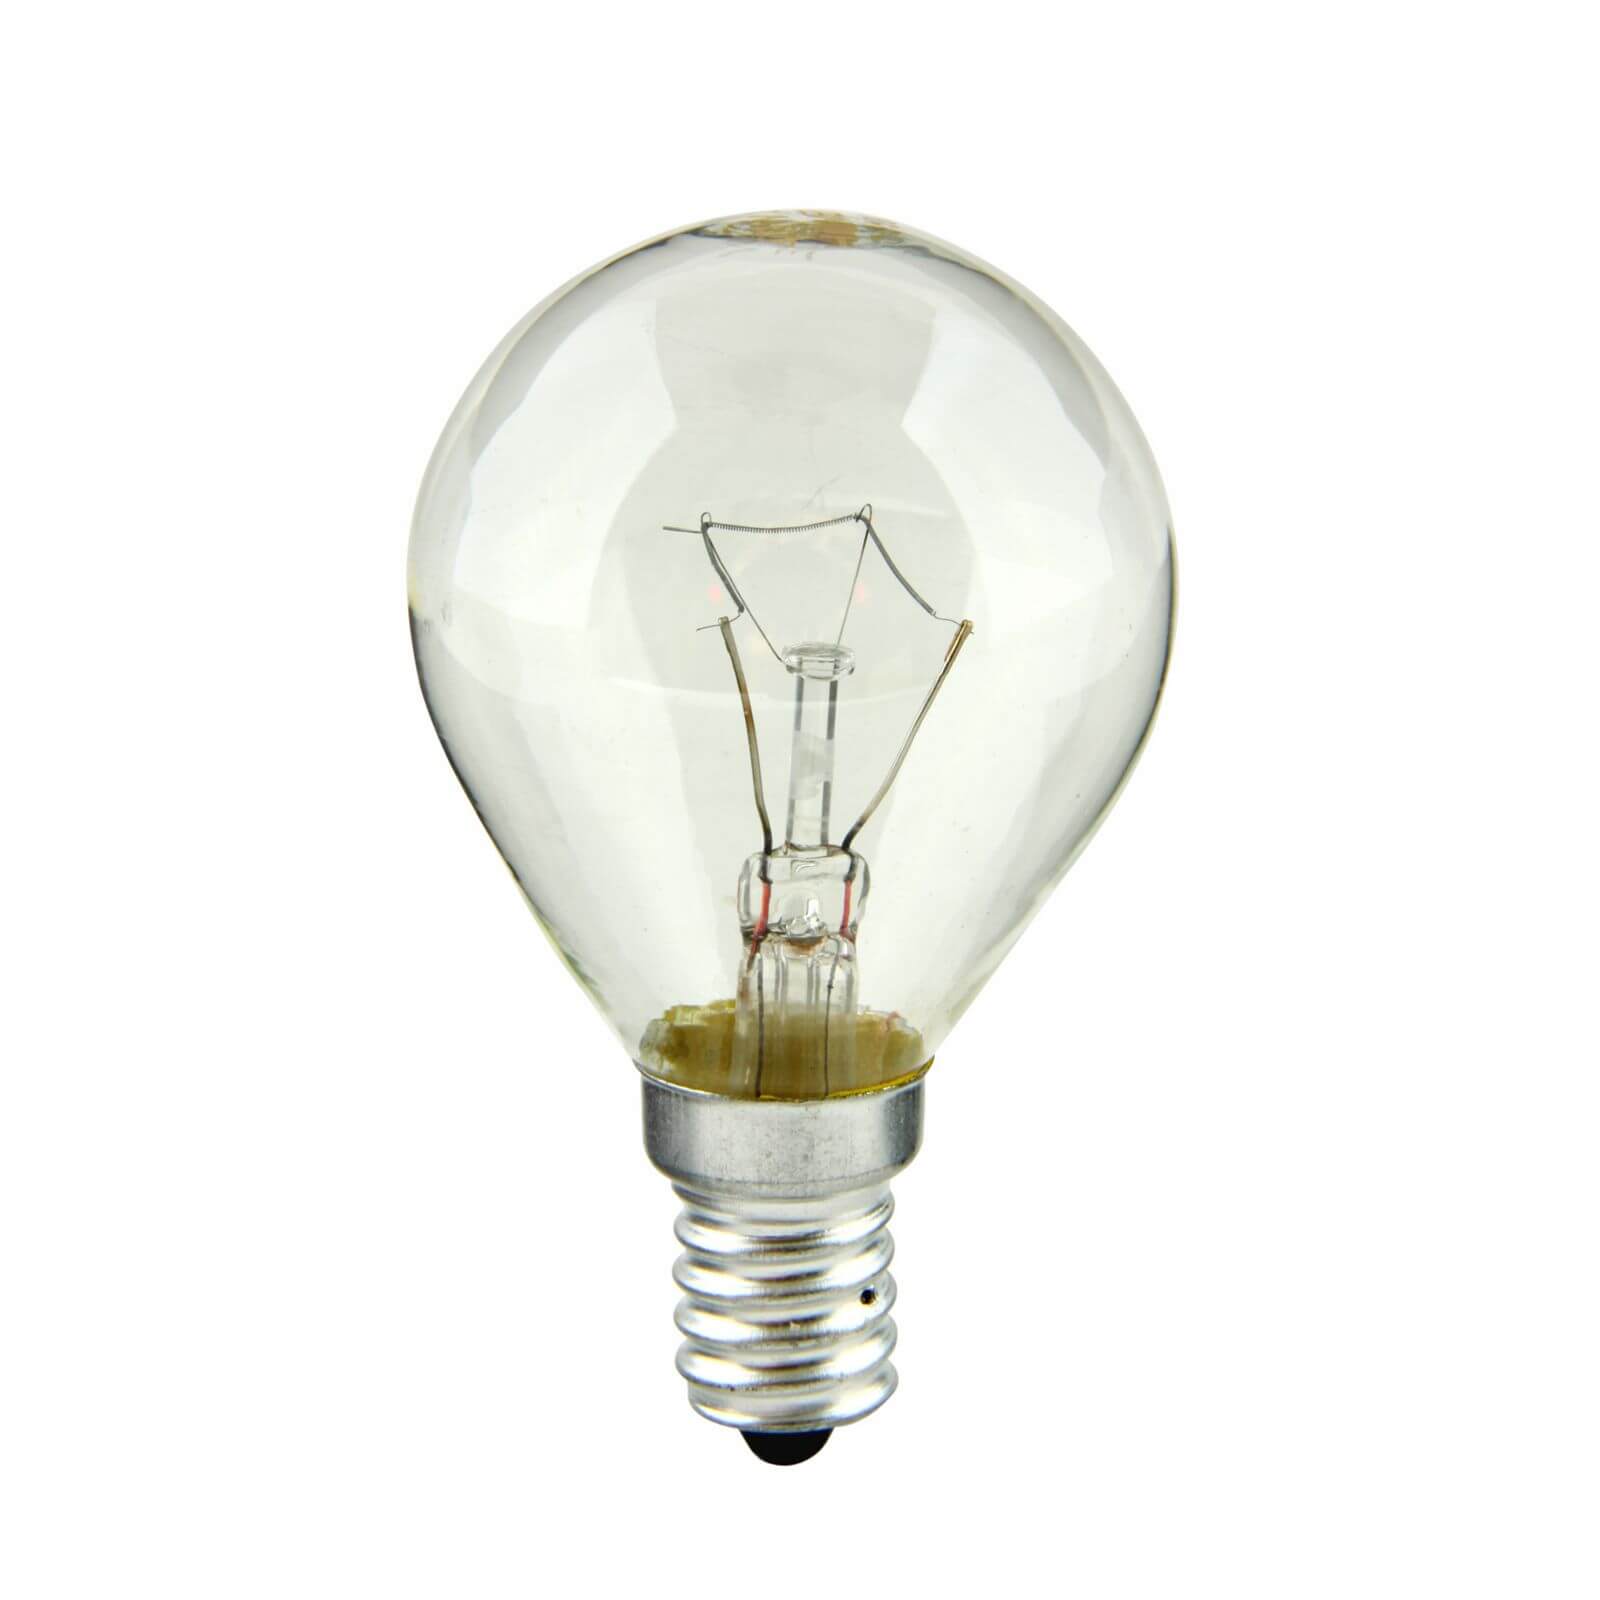 Photo of Ses 40w Oven Light Bulb